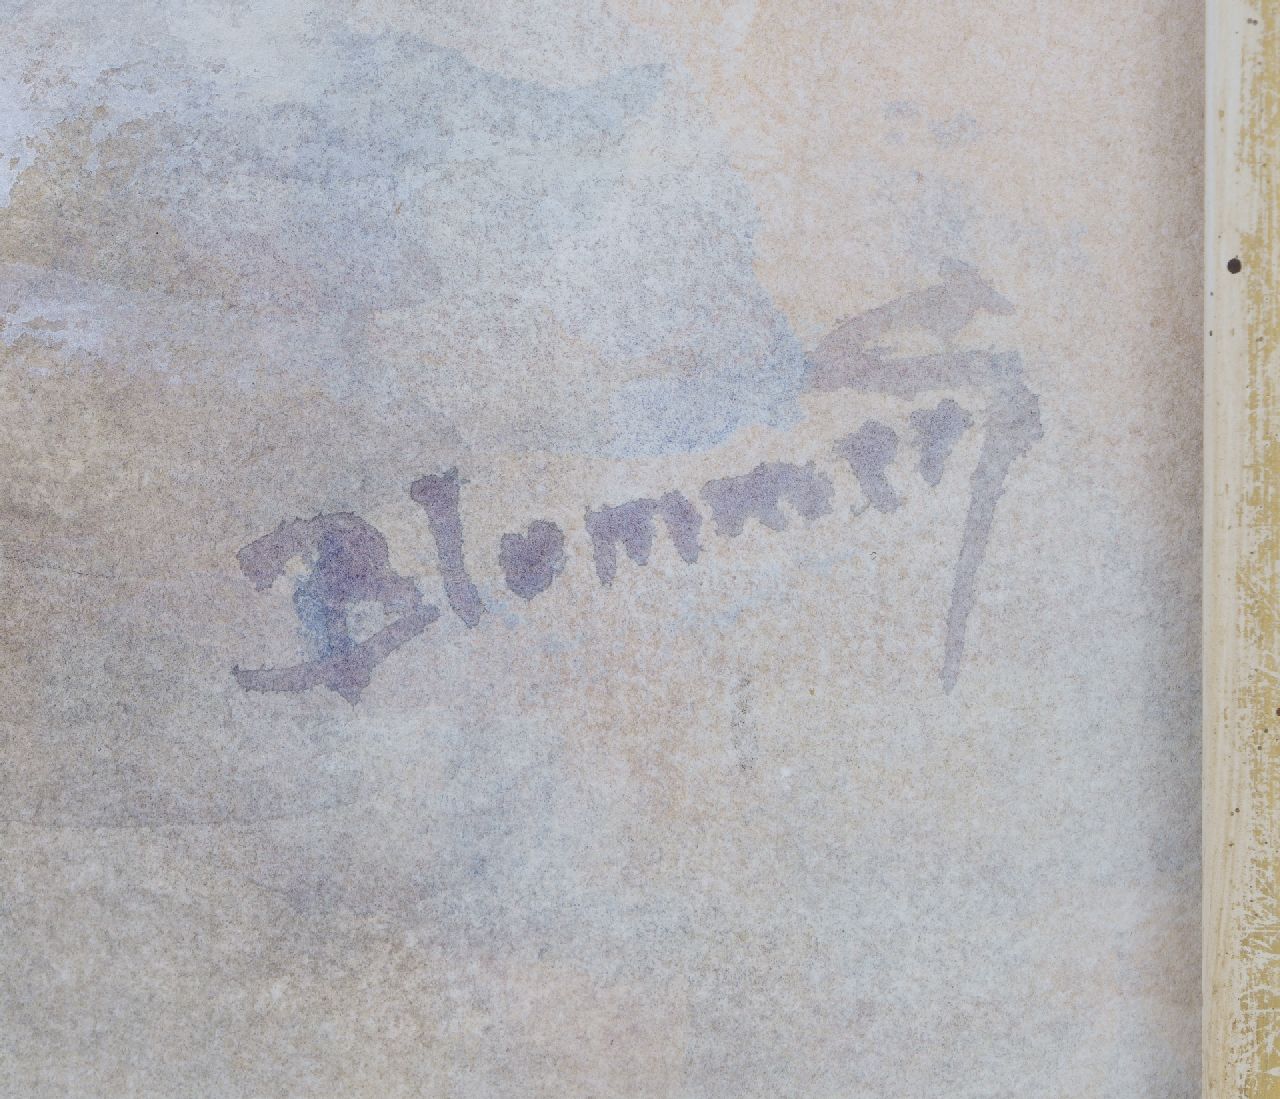 Bernard Blommers Signaturen Die ersten Schritte